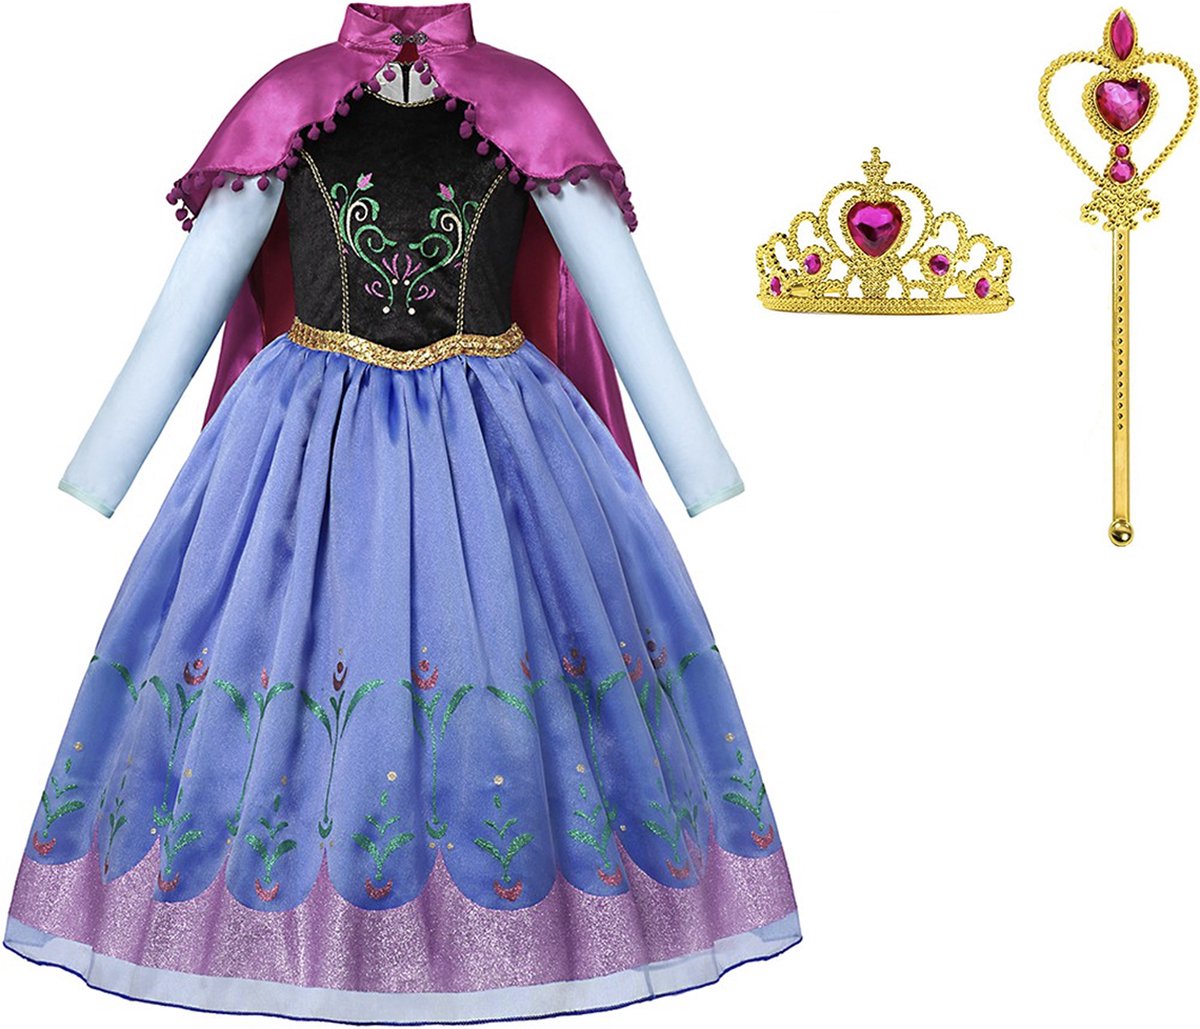 Prinsessenjurk meisje - Prinsessen speelgoed - verkleedkleding meisje - Het Betere Merk - Lange roze cape - Maat 122/128 (130) - Carnavalskleding - Kroon (tiara) - Toverstaf - Verkleedkleren - Kleed